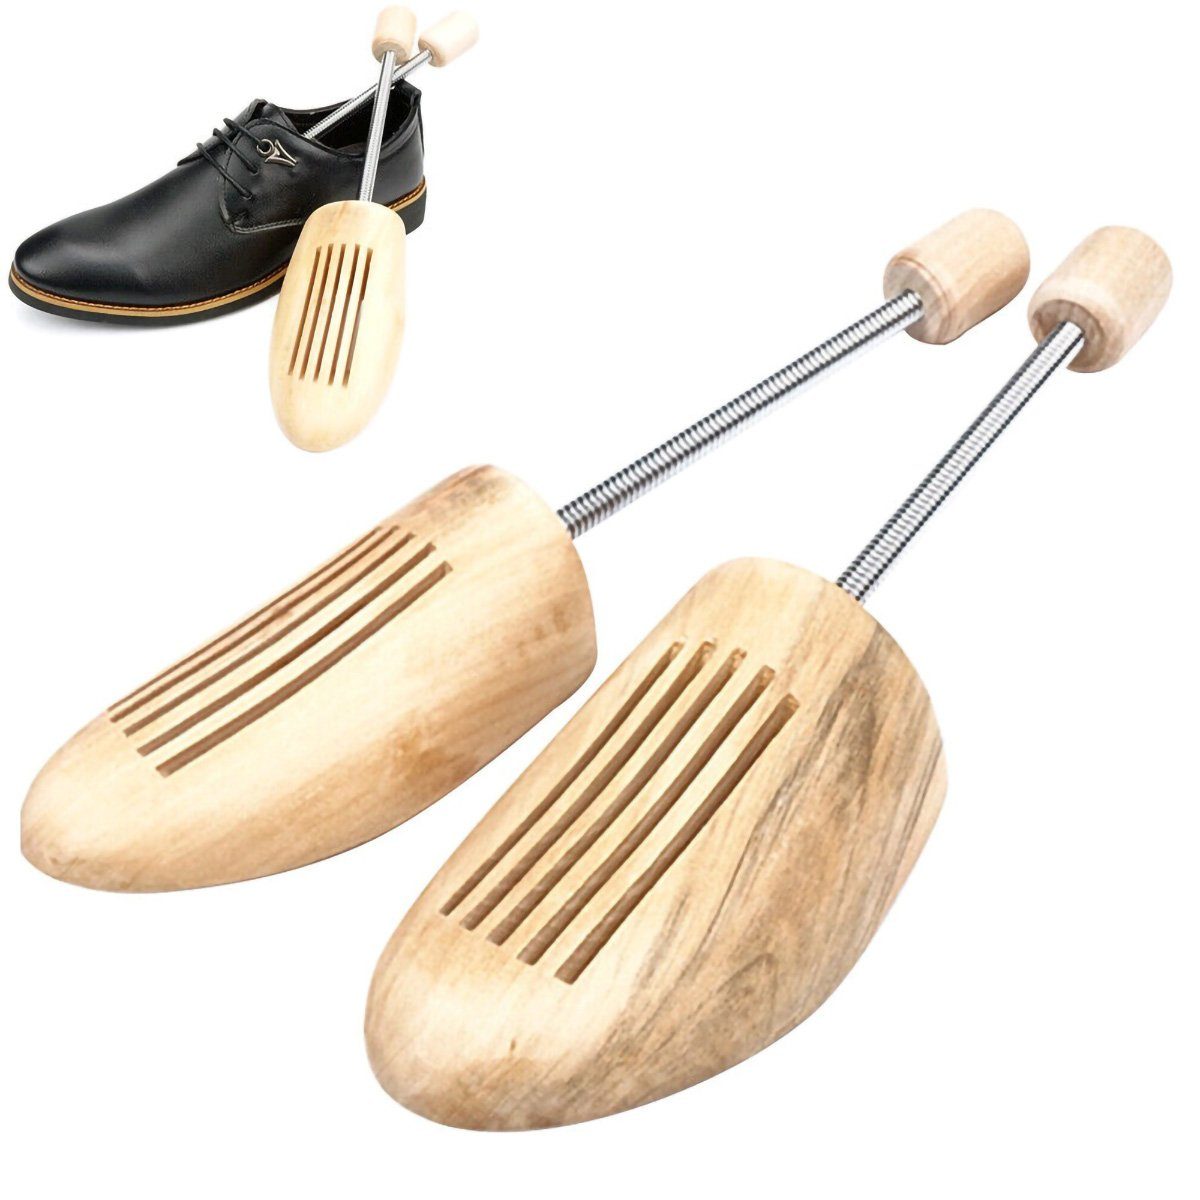 yozhiqu Schuhspanner Anti-Schuh-Schutz, Holz-Schuhspanner, Anti-Verformungs-Schuhspanner, Anti-Schuh-Schild, Schuhspanner aus Holz, Schuhspanner